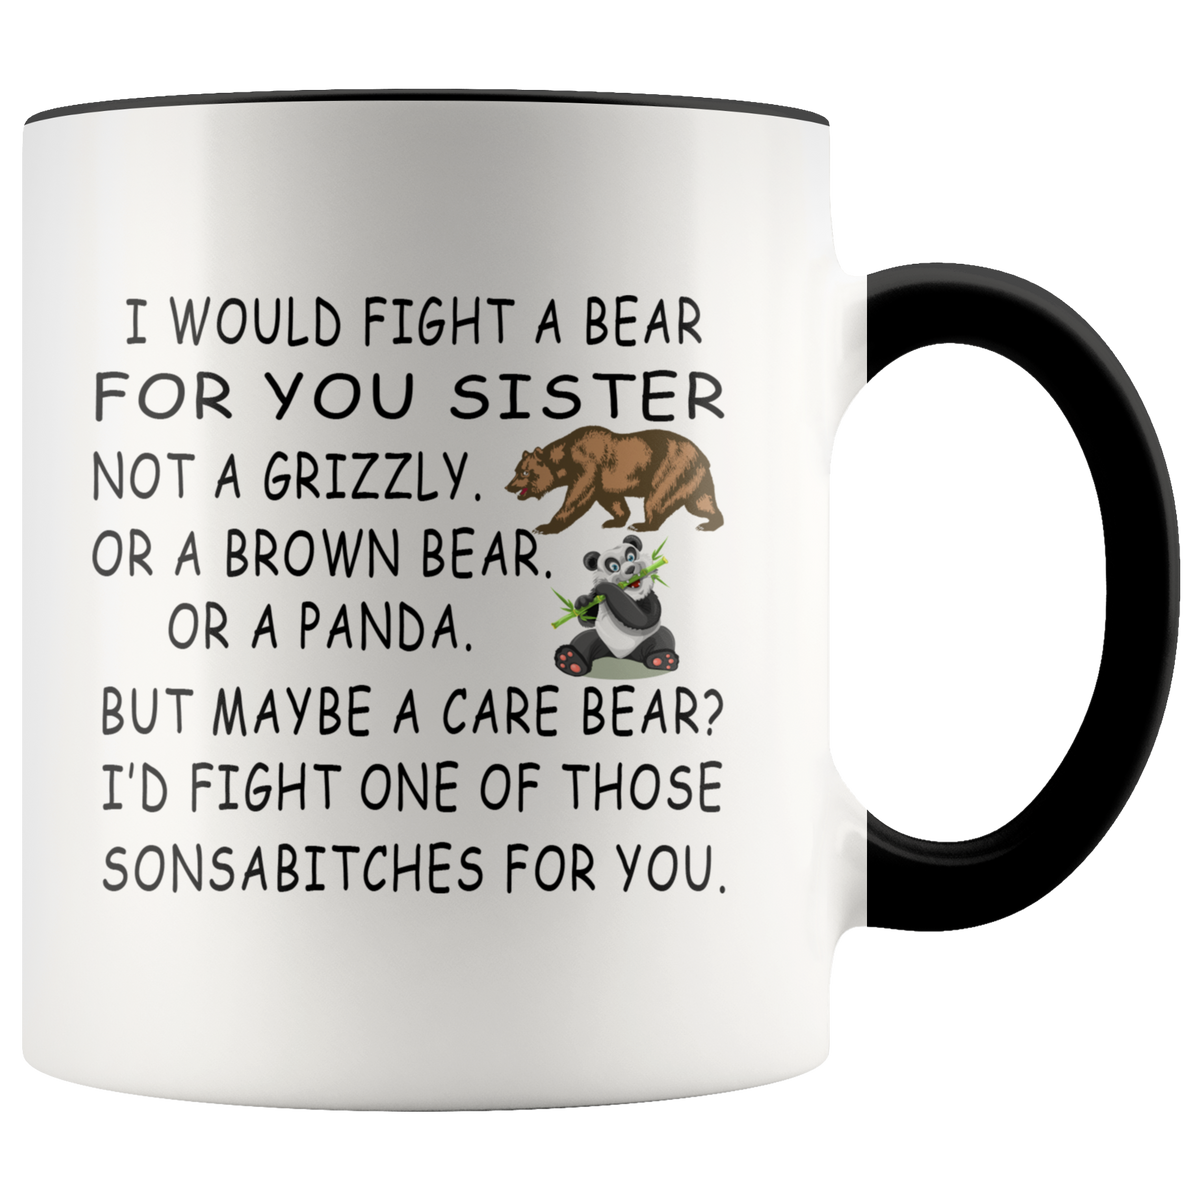 Funny Mug Gift For Sister - I Would Fight A Bear For You Sister Accent Coffee Mug, Birthday Christmas Gift For Sister